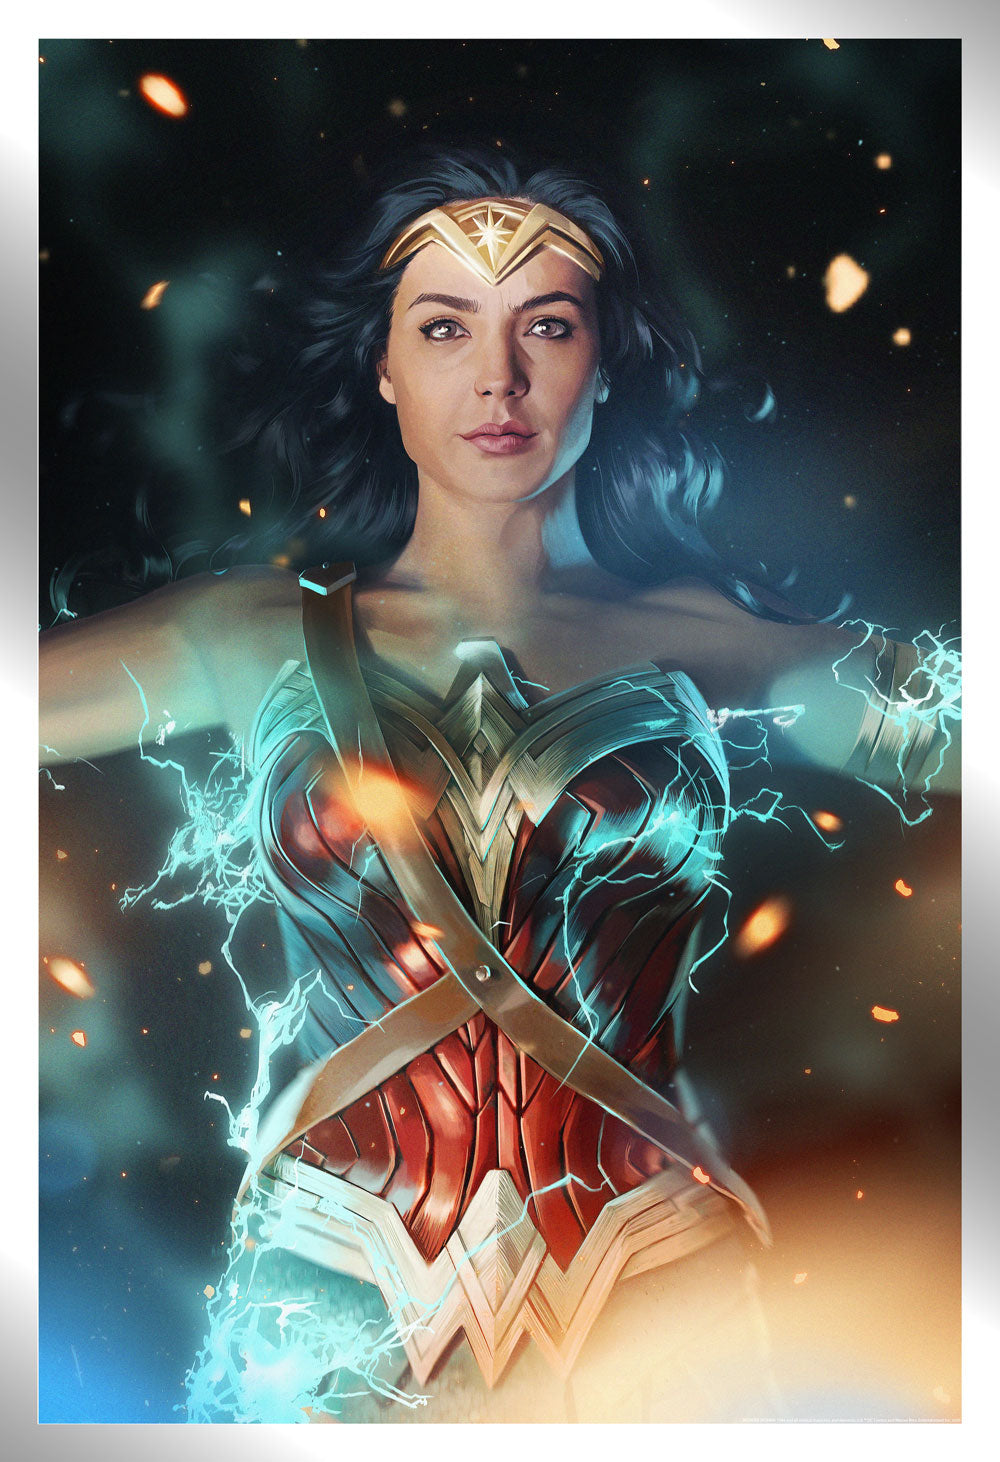 Ann Bembi "Wonder Woman" Metallic Variant